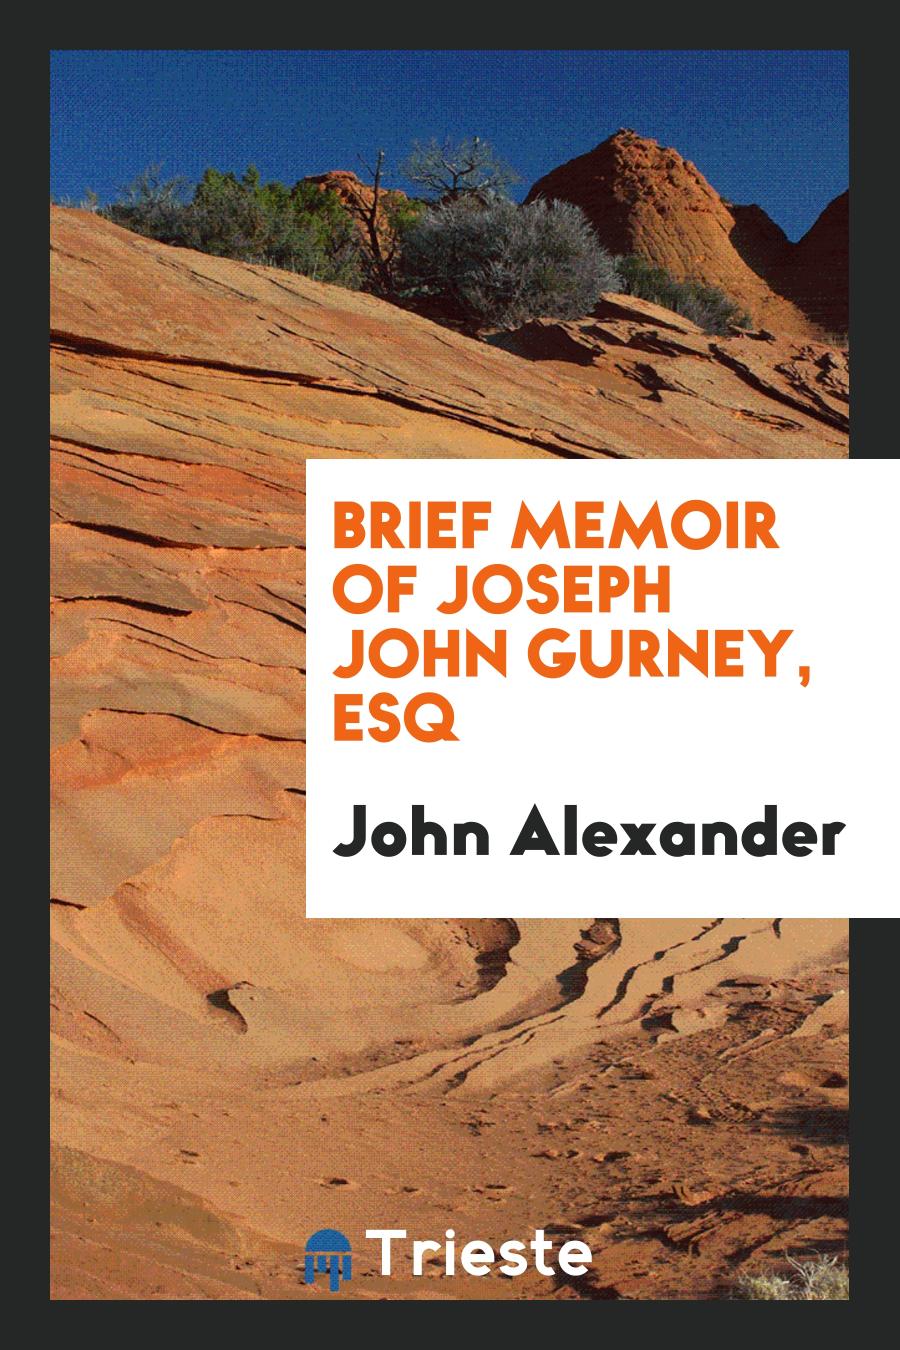 Brief memoir of Joseph John Gurney, esq